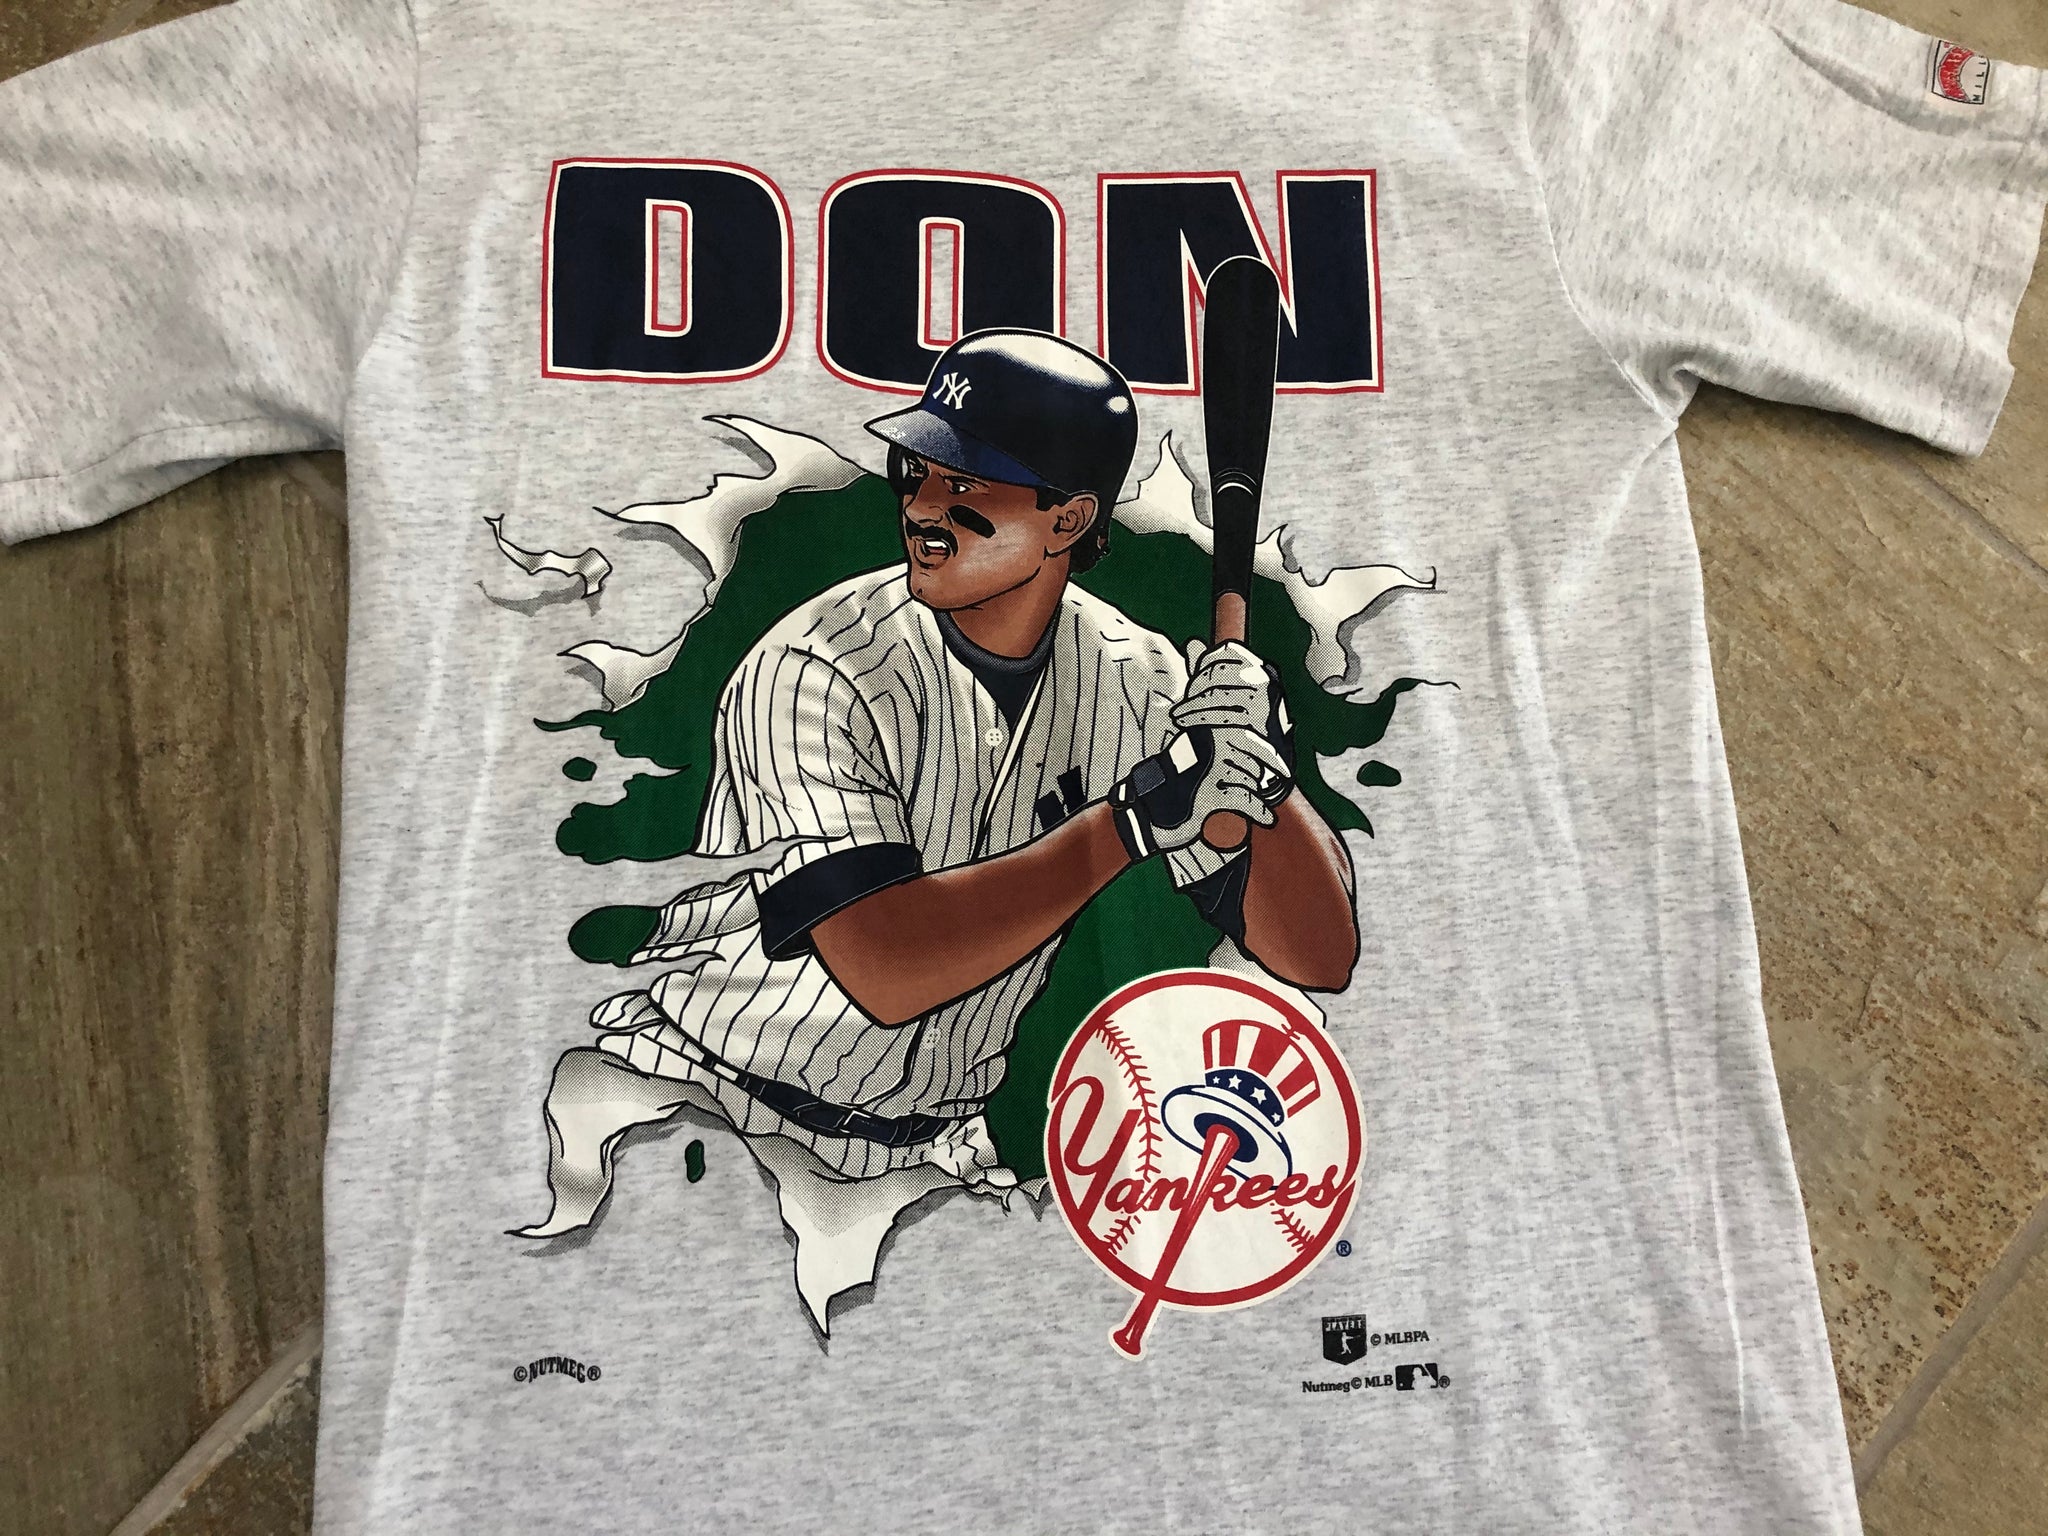 Official Don Mattingly New York Yankees Jersey, Don Mattingly Shirts,  Yankees Apparel, Don Mattingly Gear